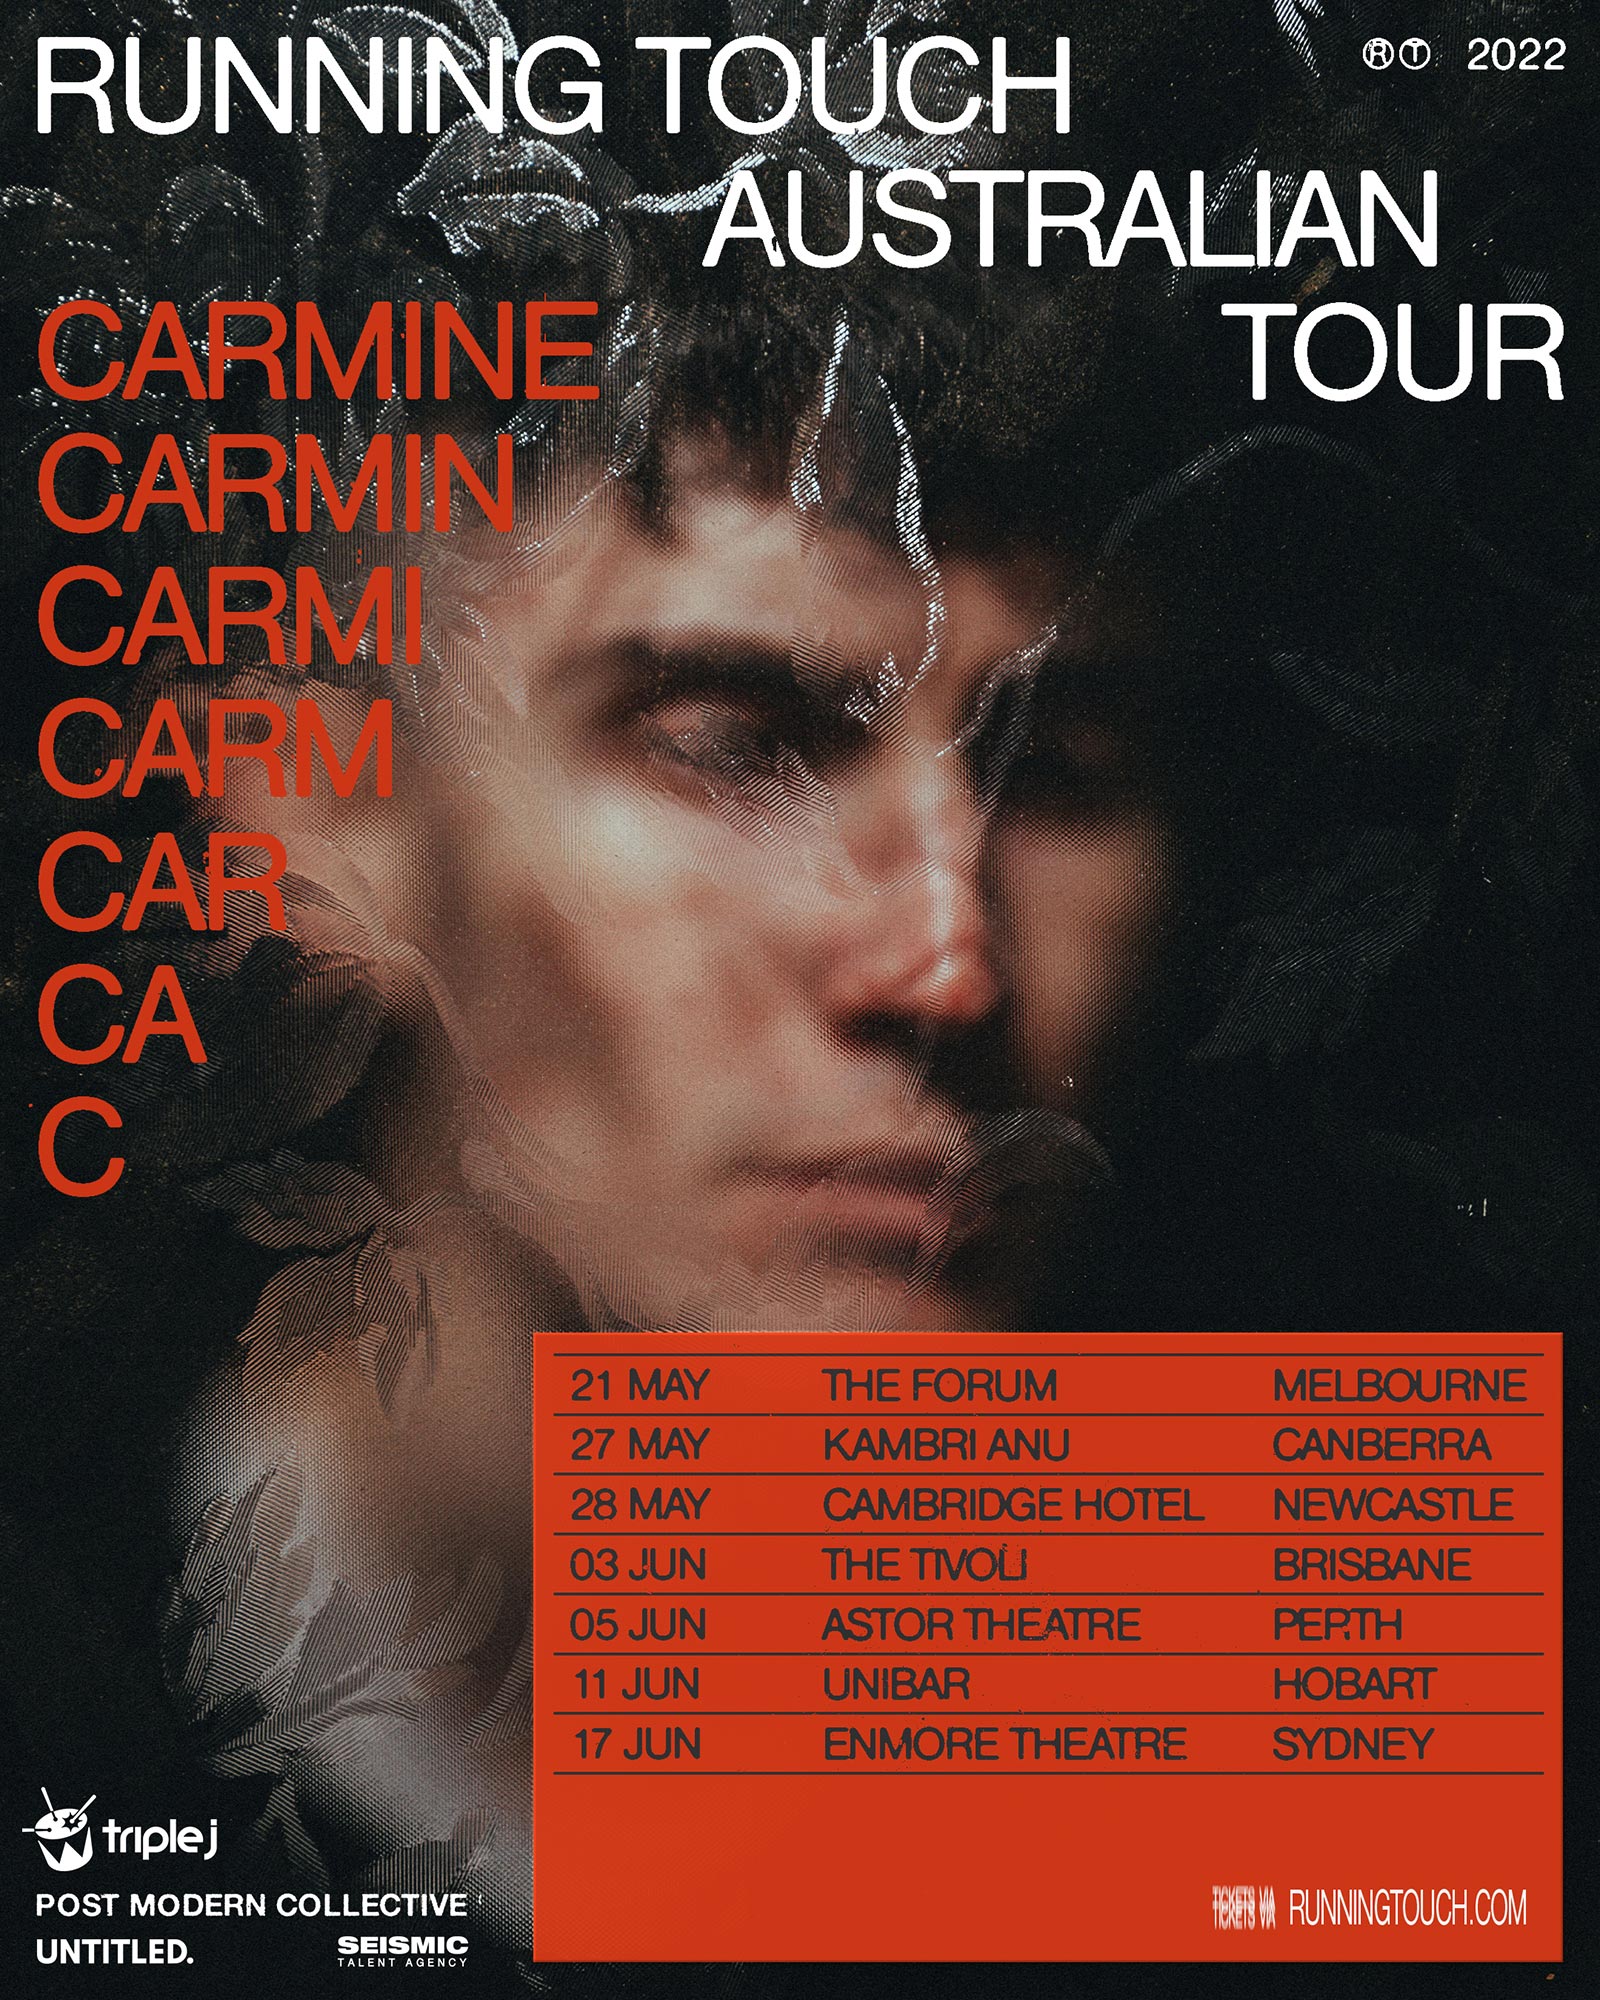 running-touch-carmine-australian-tour-2022-poster-oz-edm